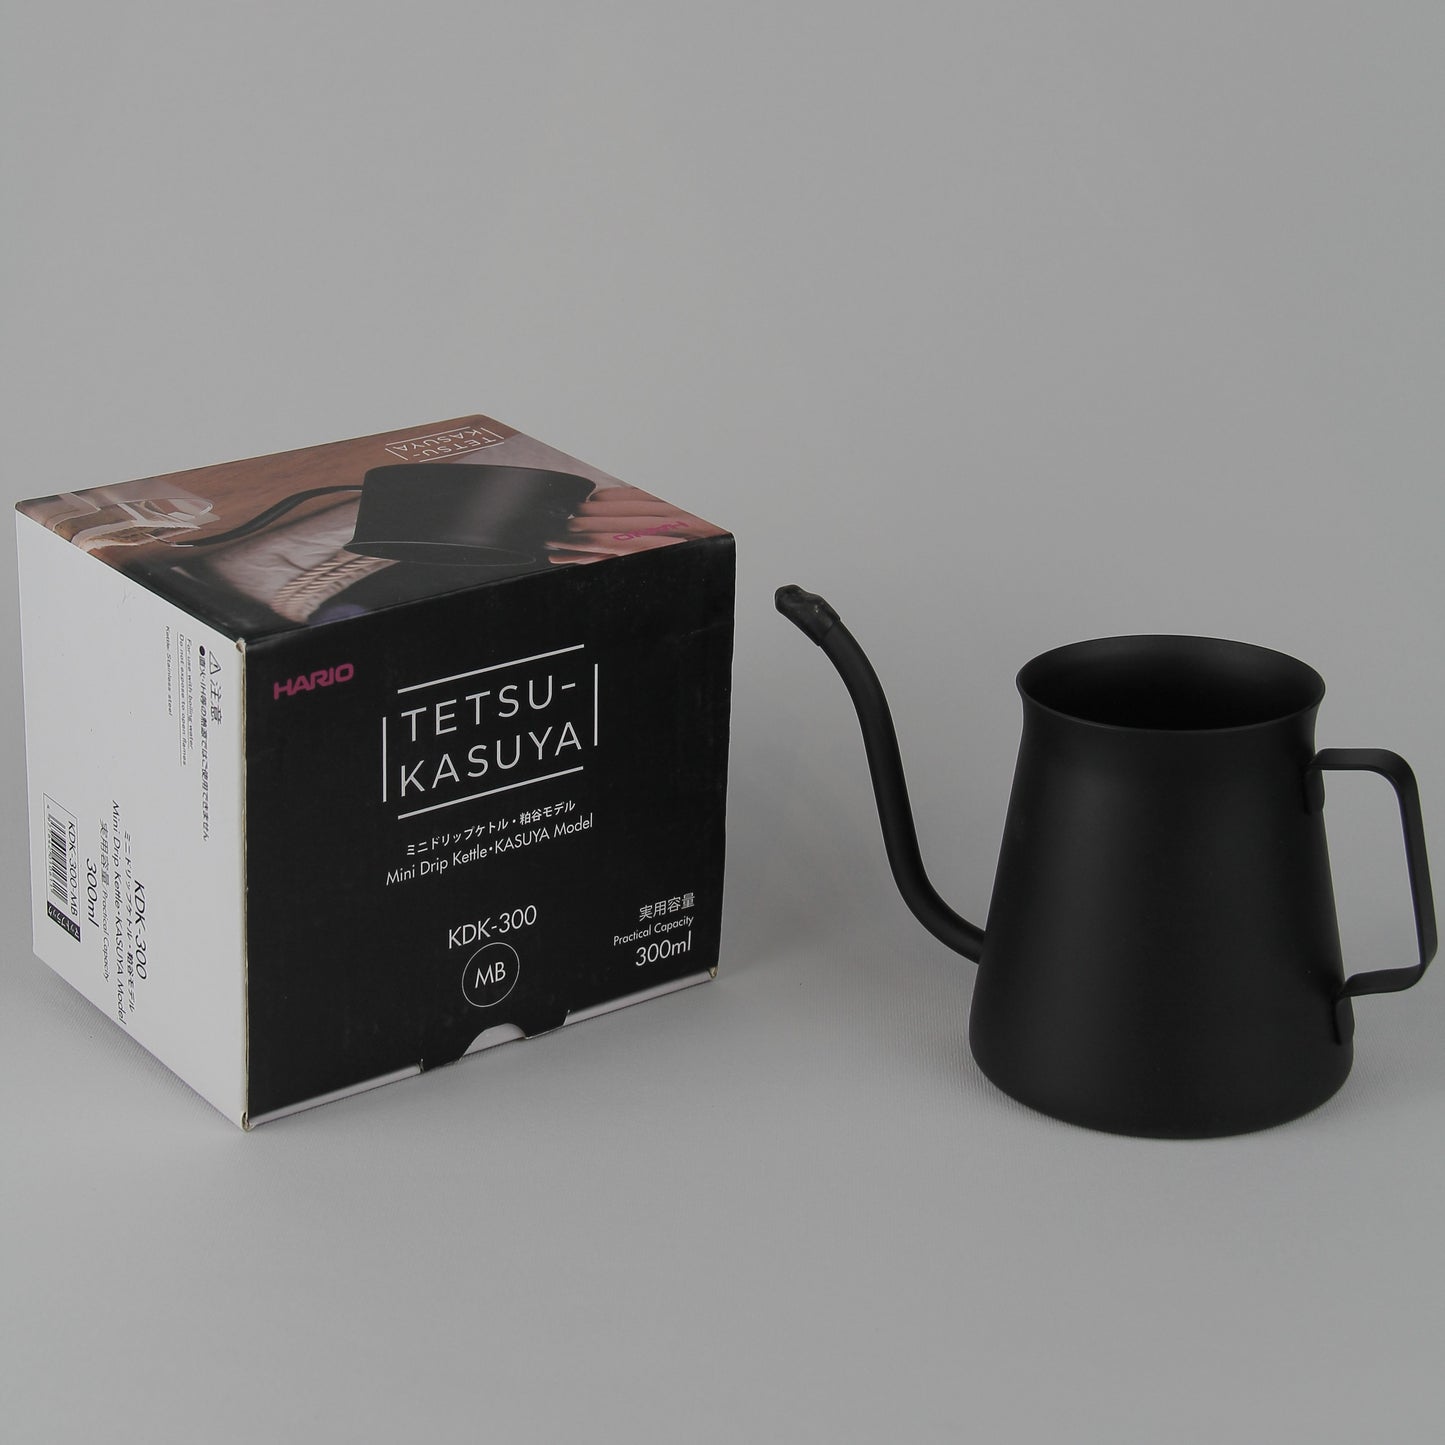 stainless steel mini drip kettle